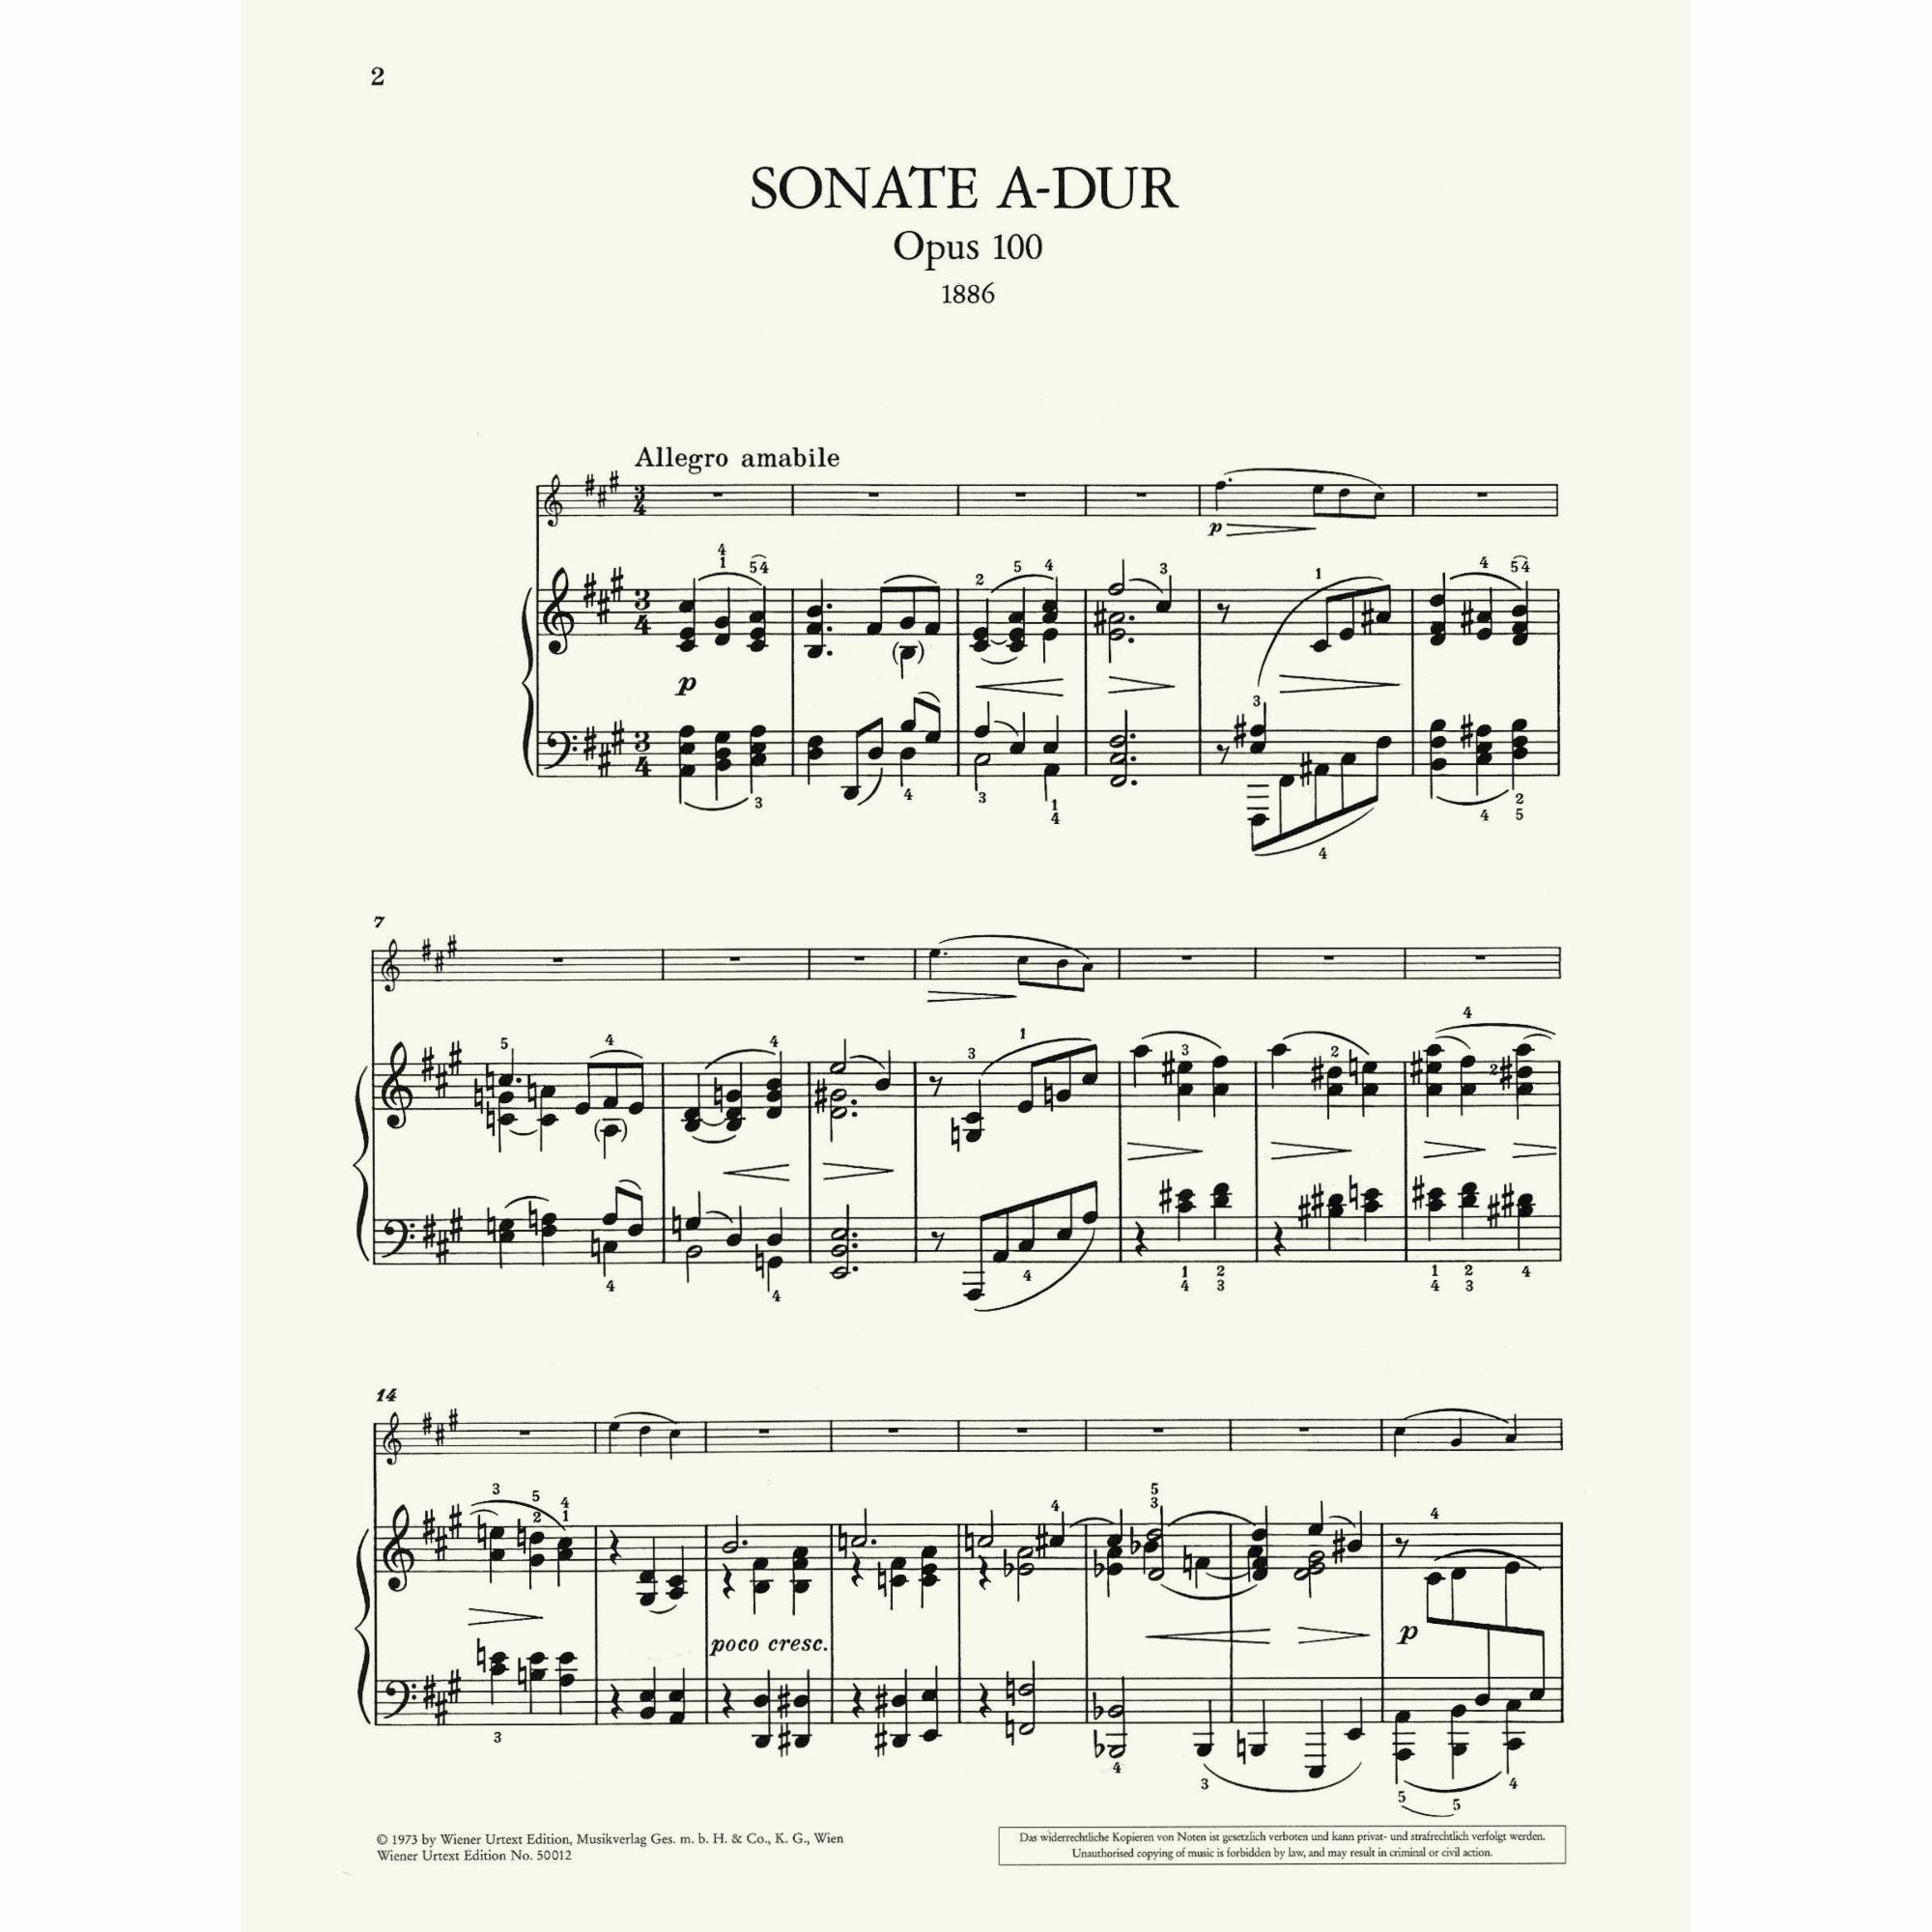 Sample: Piano (Pg. 2)